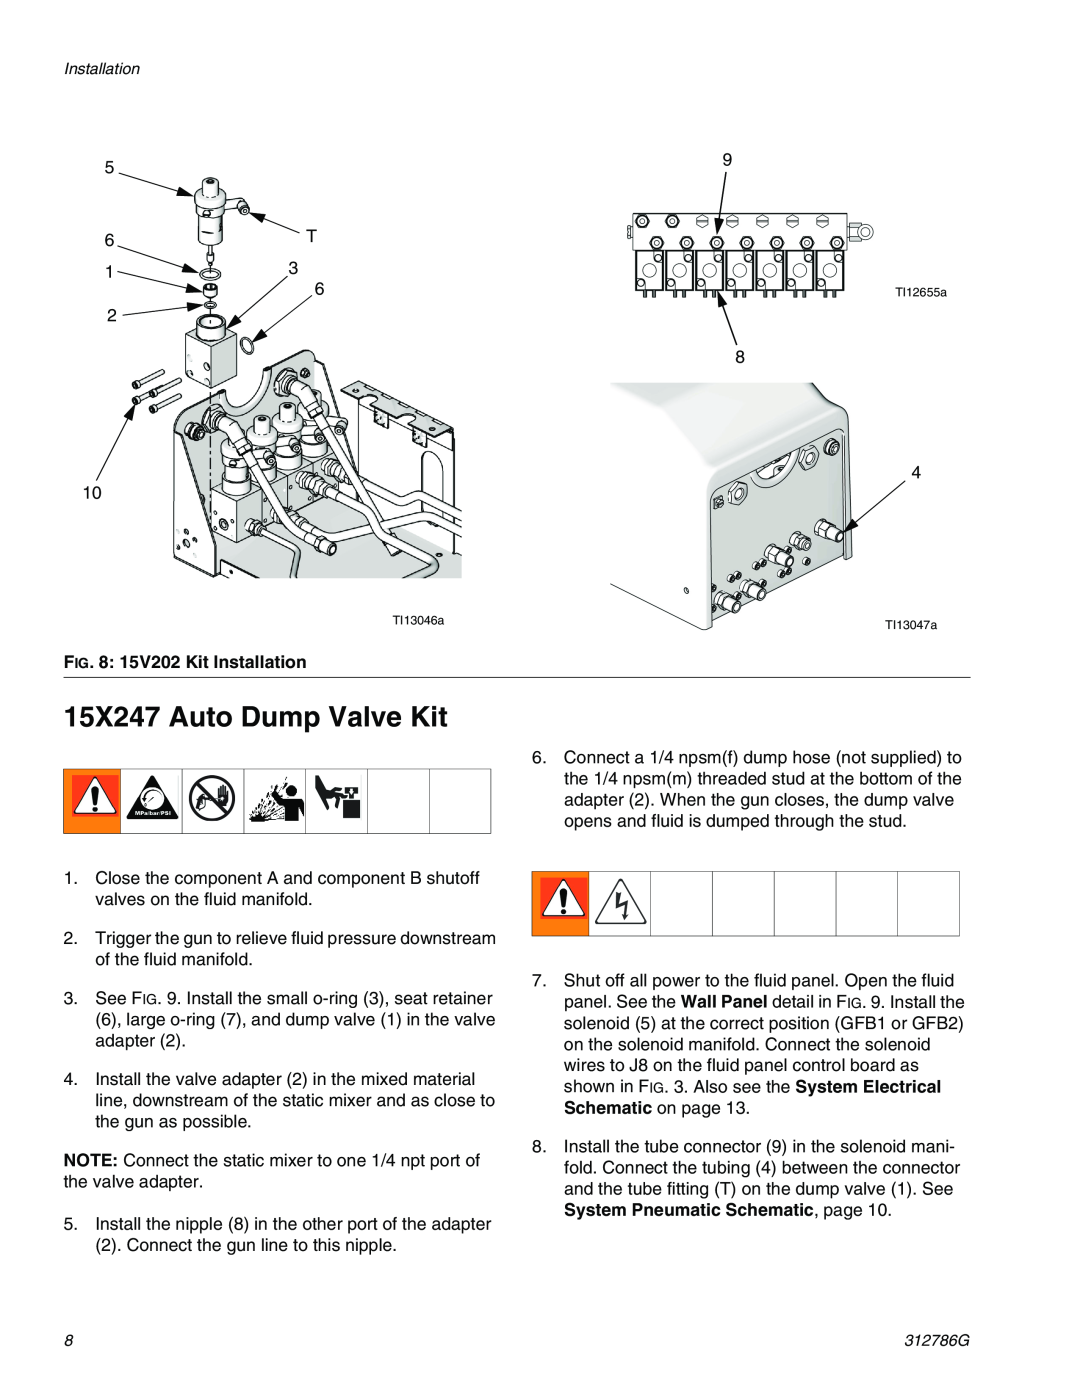 Graco TI12954a, TI12743a important safety instructions 15X247 Auto Dump Valve Kit, 15V202 Kit Installation 